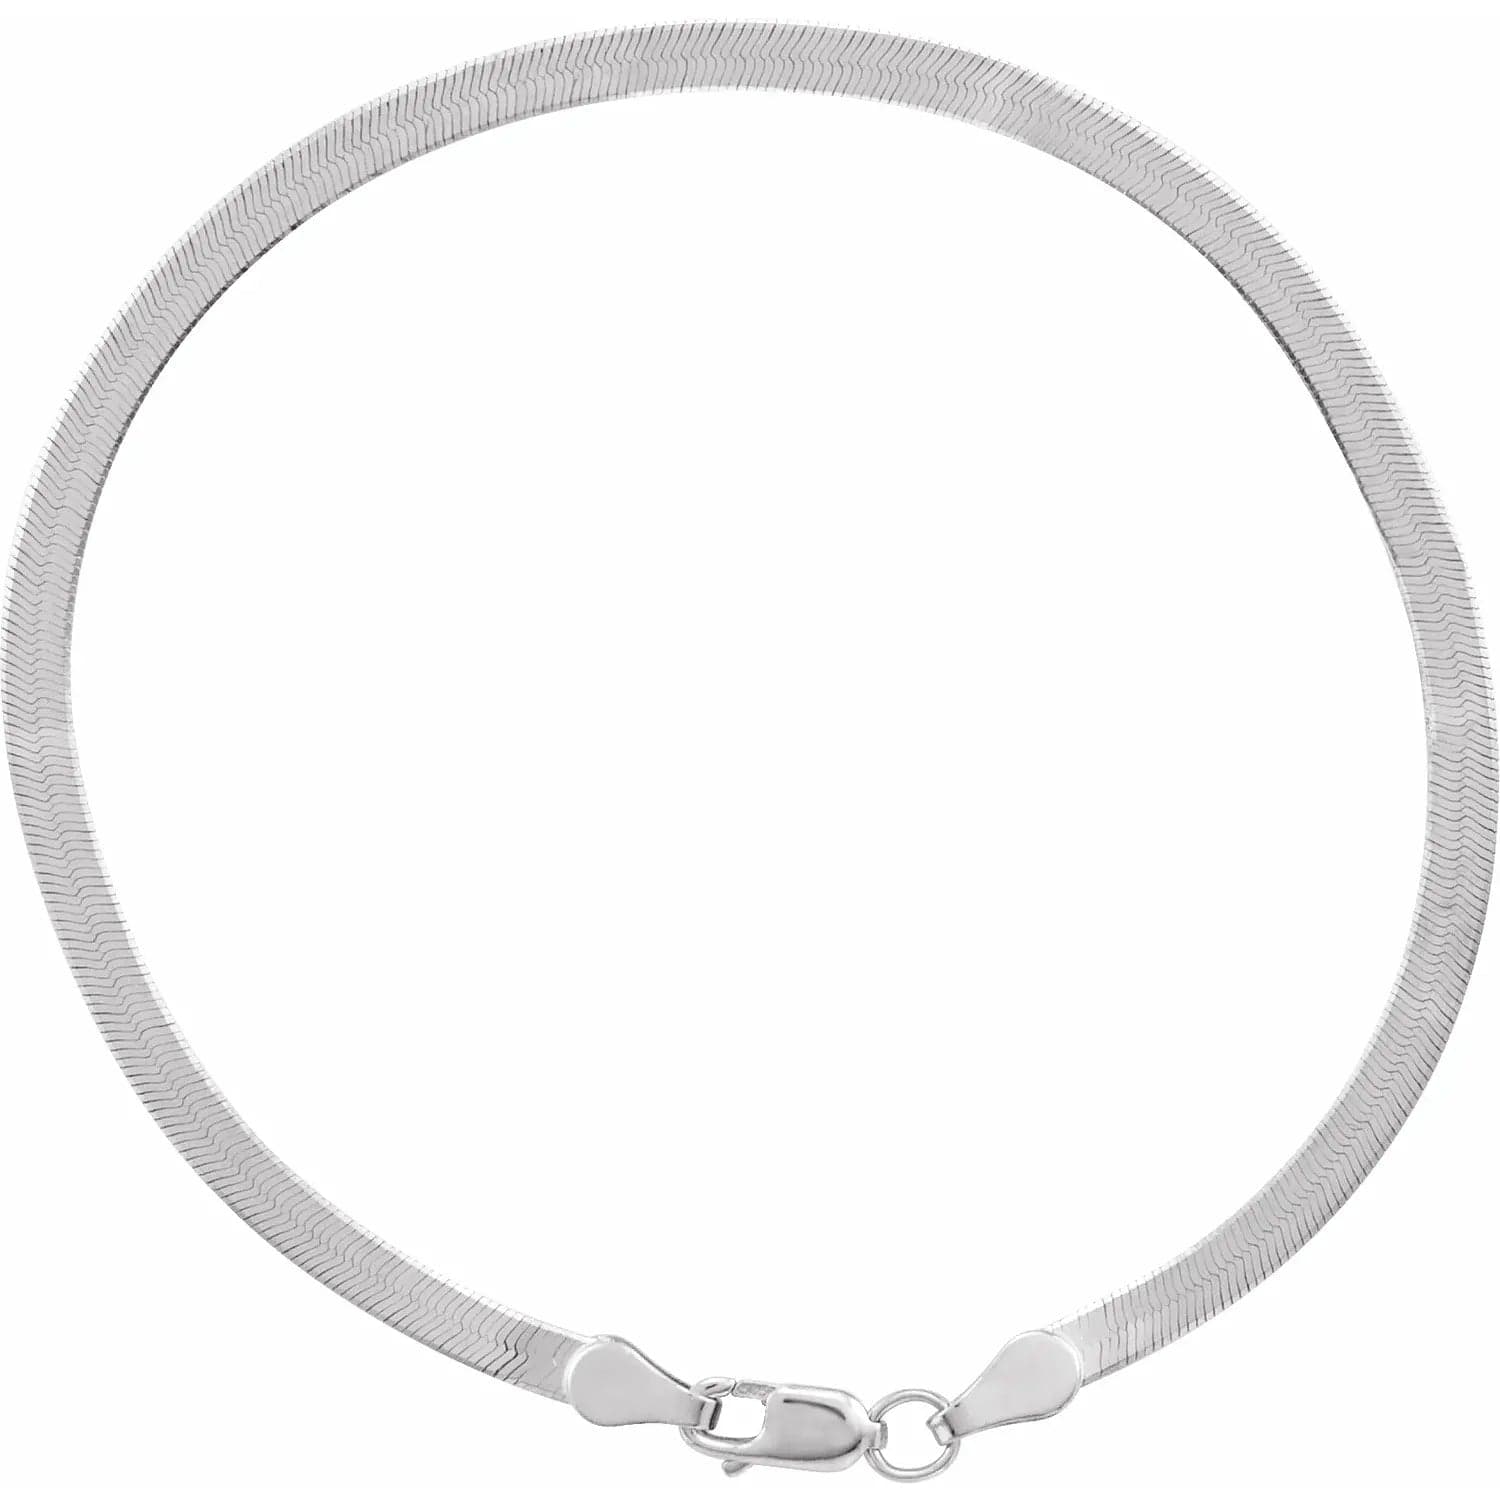 Save On Diamonds 14k White / 2.8 mm Flexible Gold Herringbone Bracelet 7”